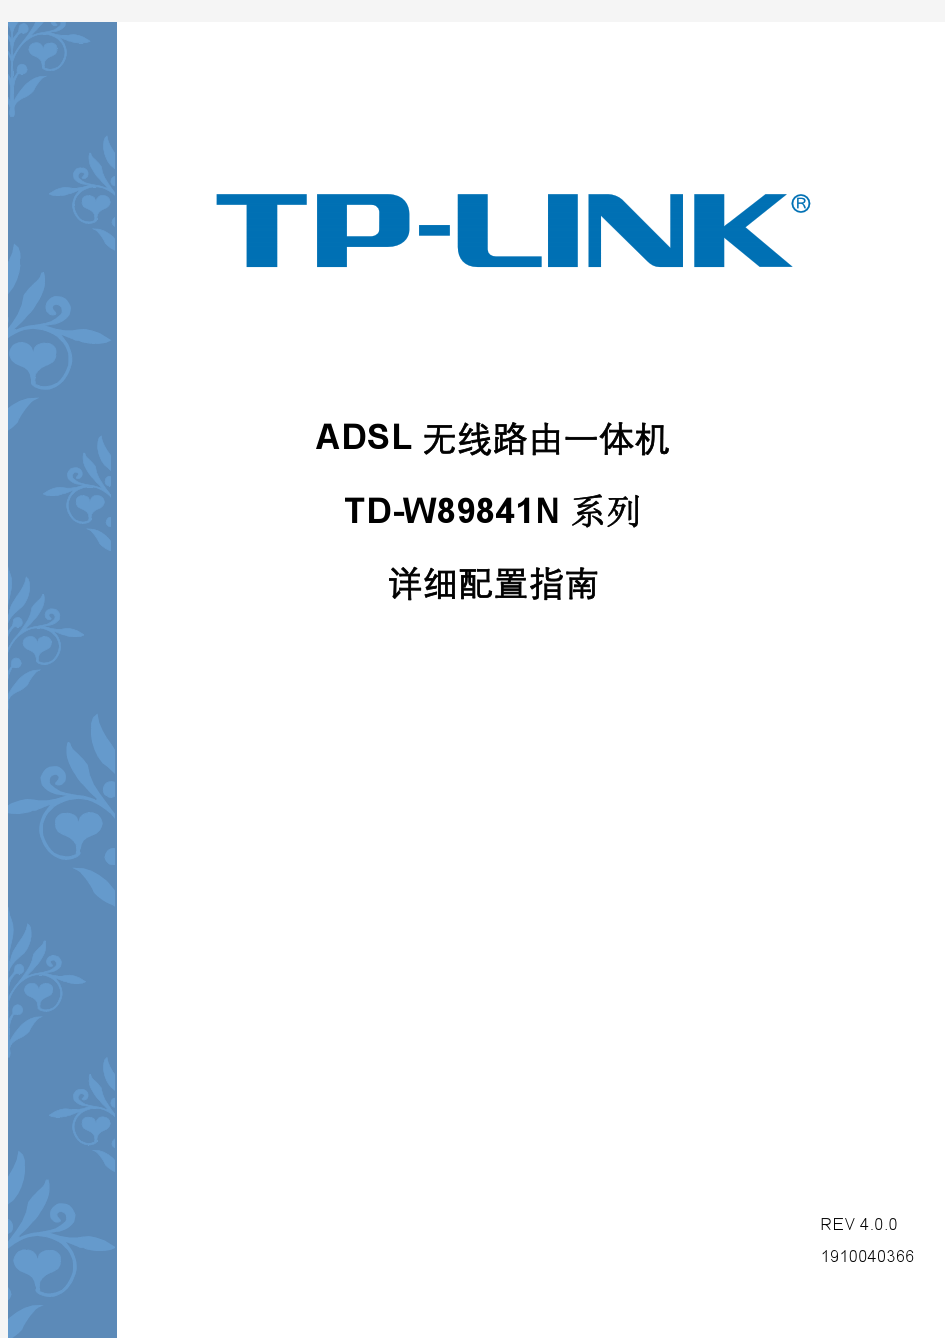 TD-W89841N增强型 V5.0详细配置指南4.0.0